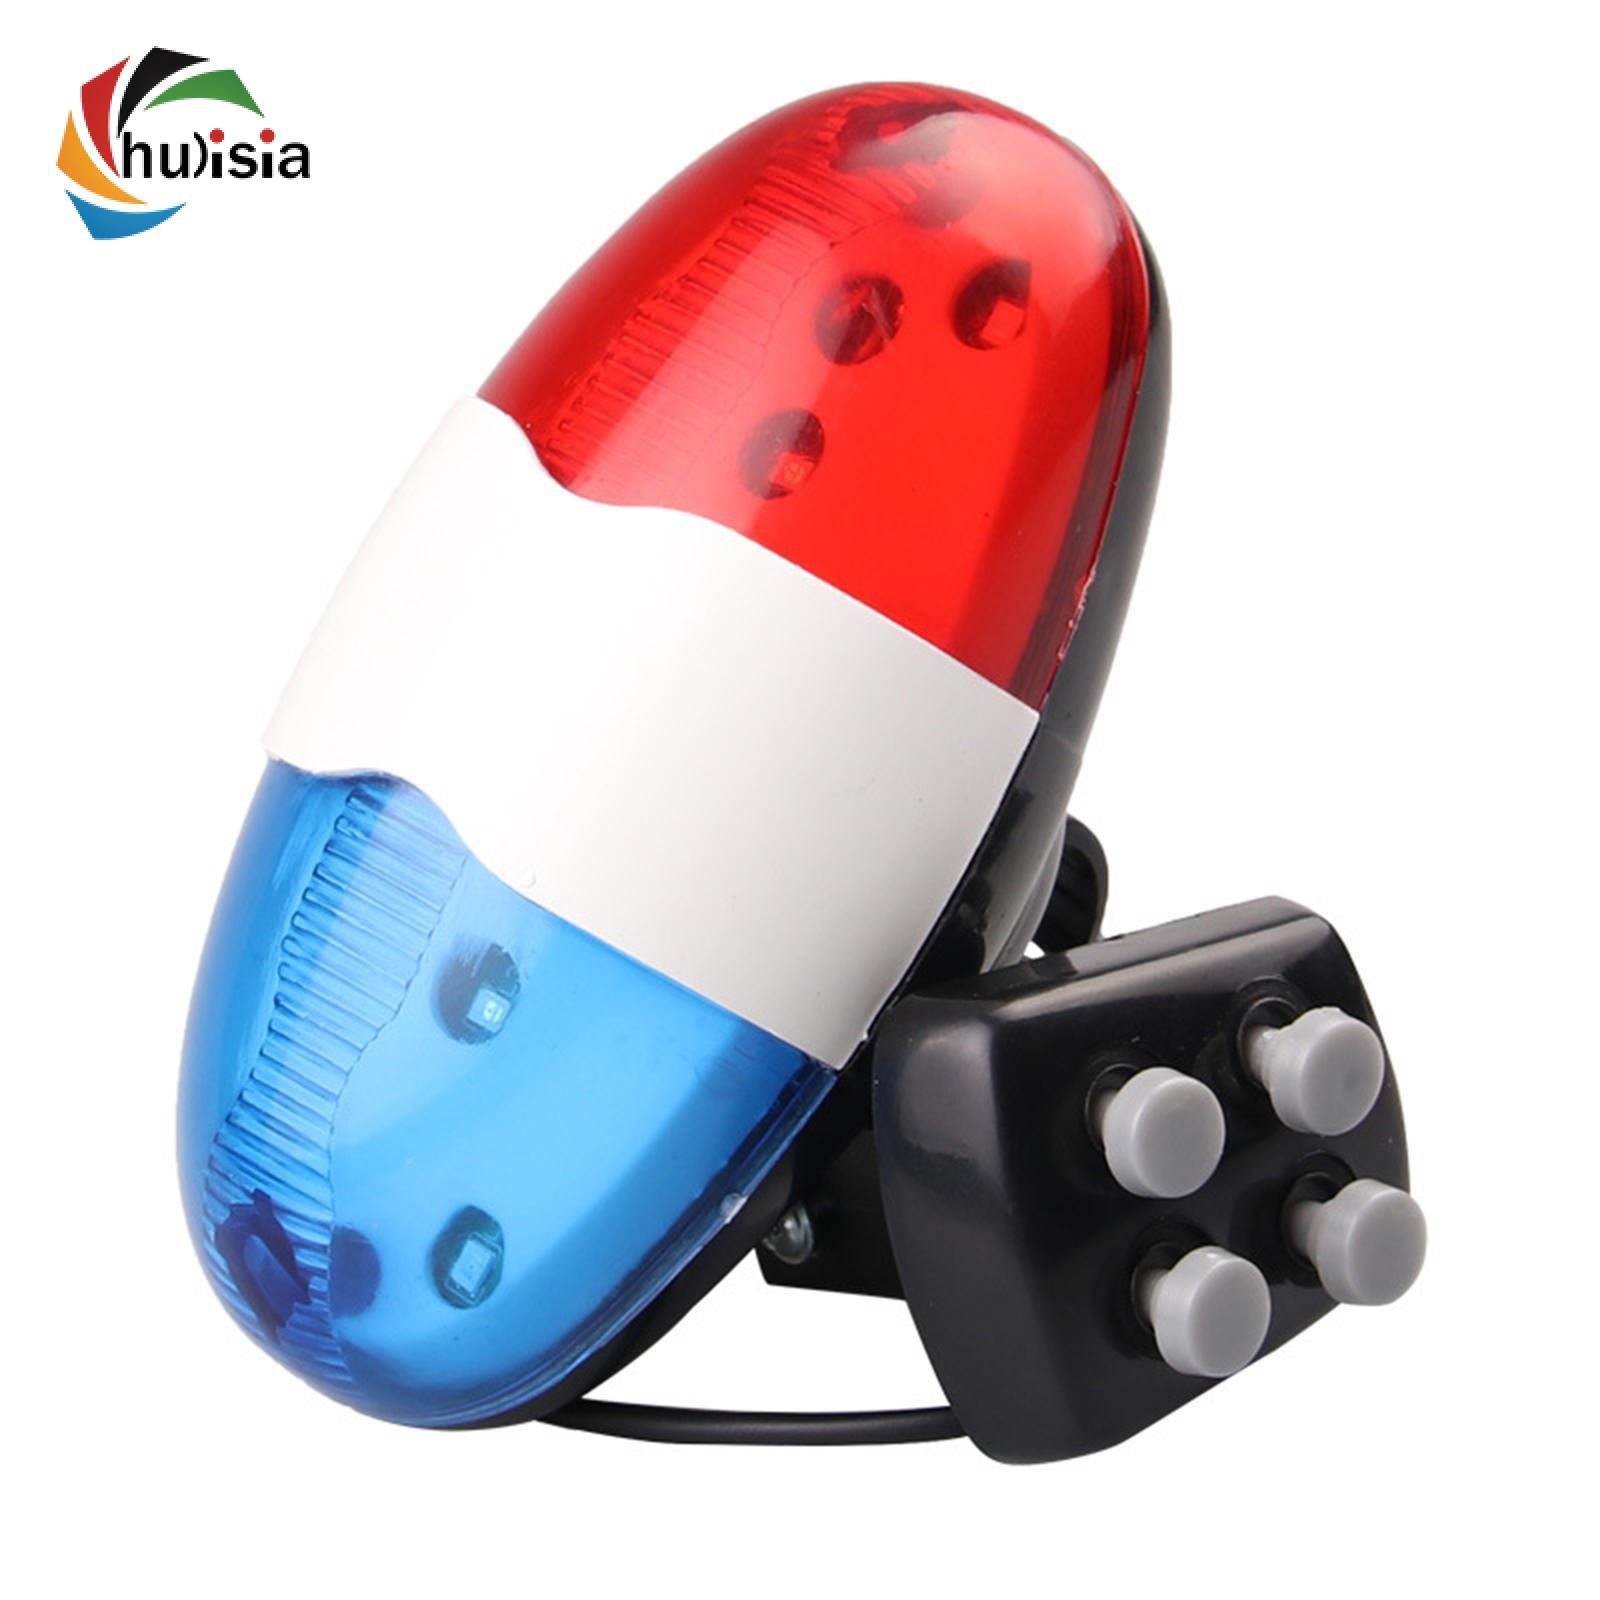 chulisia LED Bike Light with Horn Rear Light Back Taillight Bike Headlight